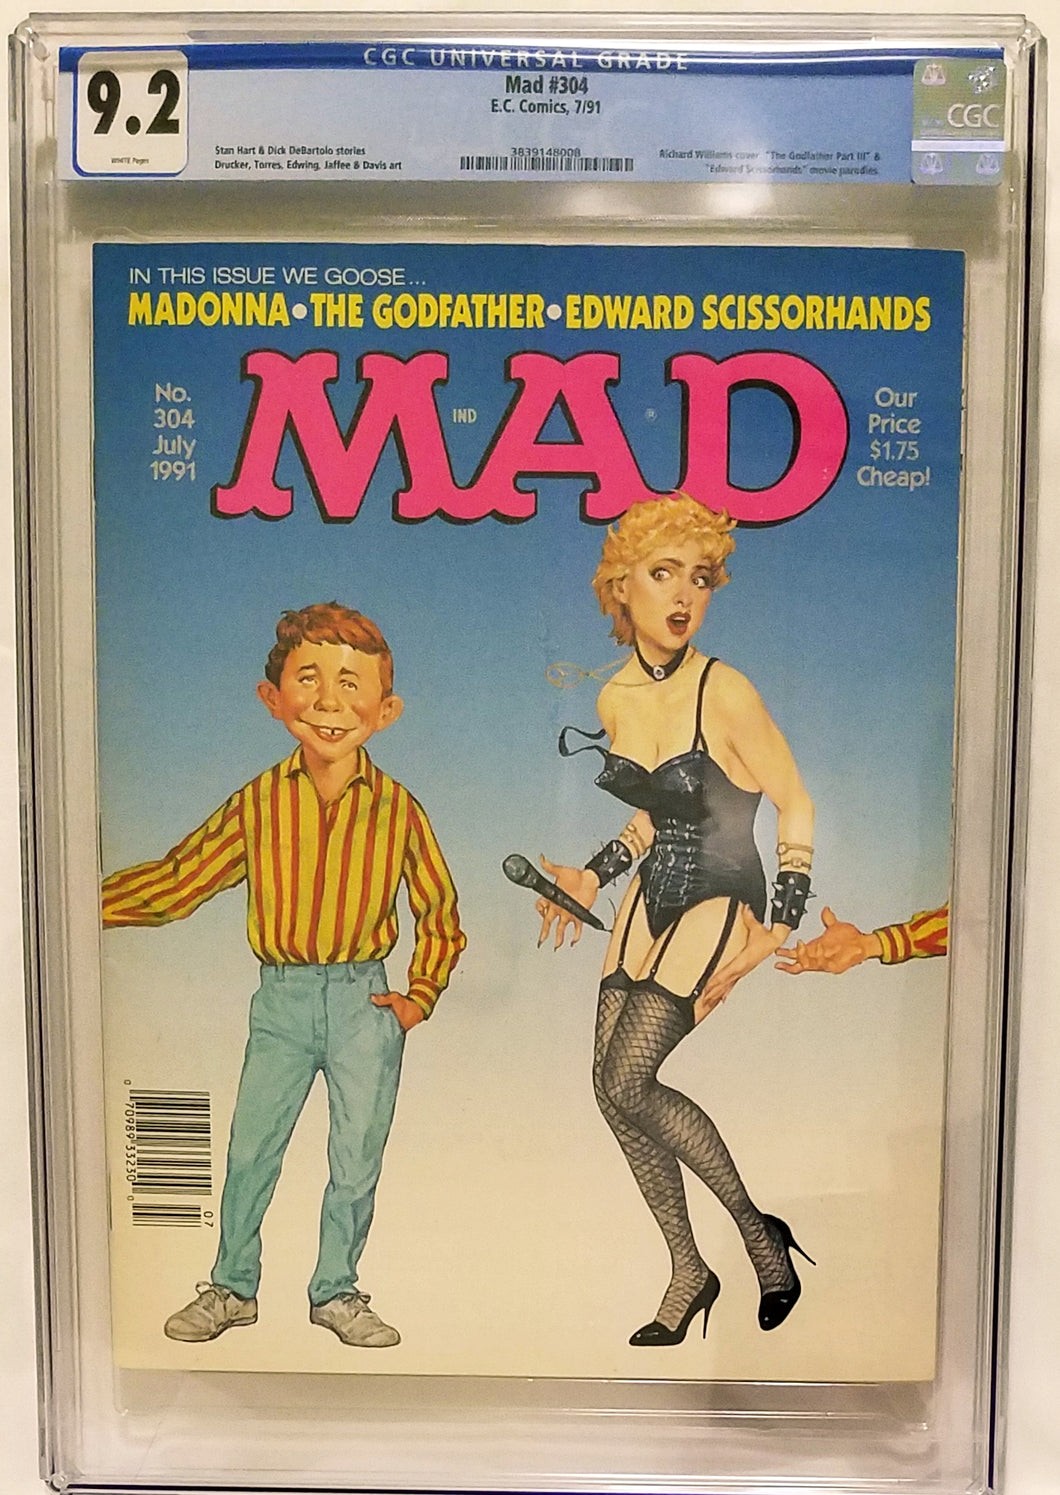 MAD Magazine#304 July 1991 CGC 9.2 - Madonna cover!